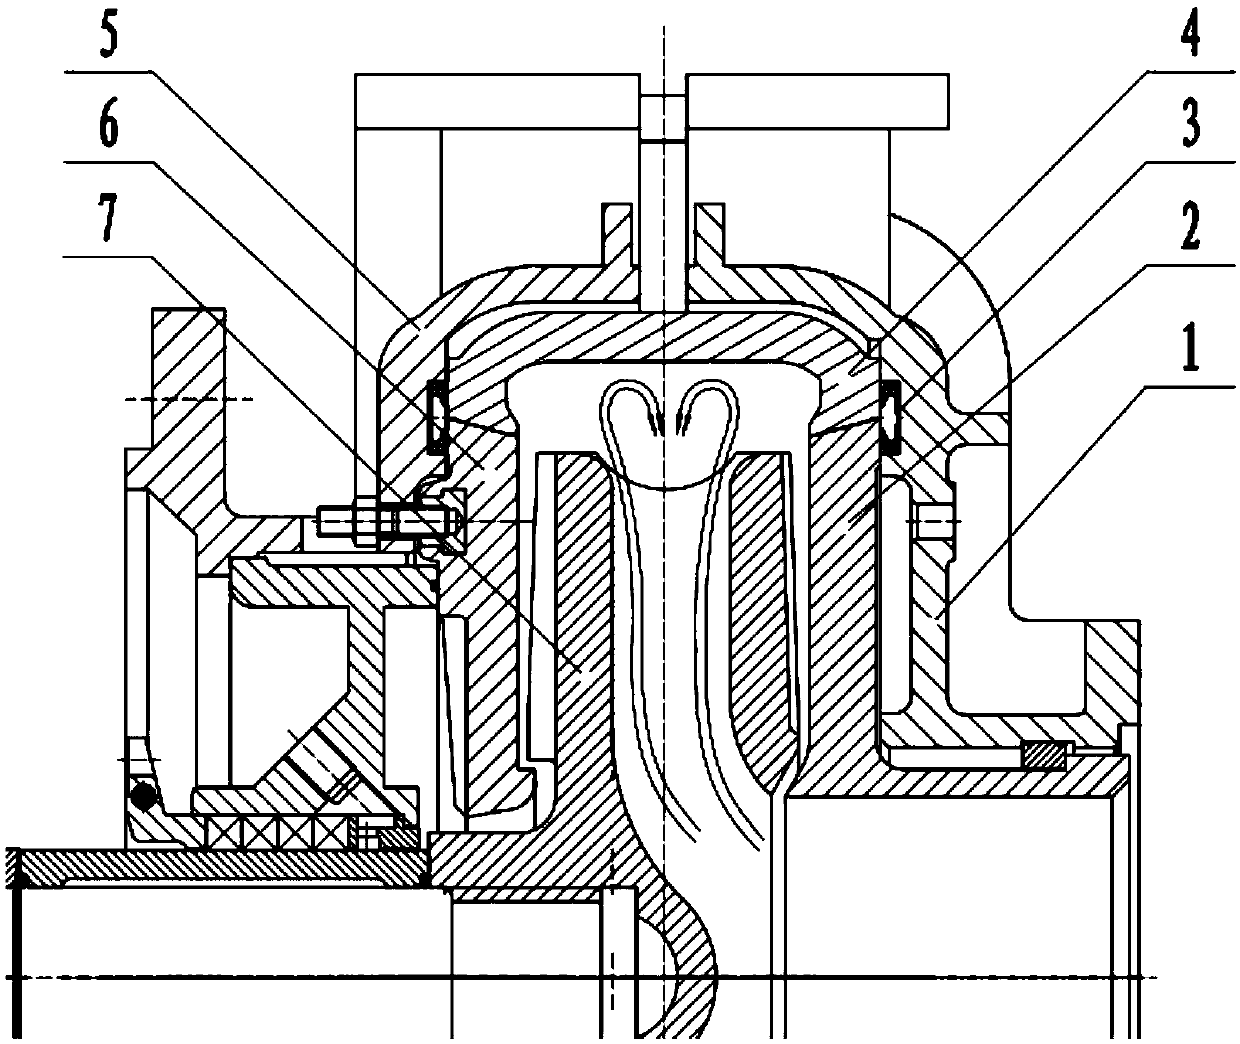 Impurity in-pump vortex impeller